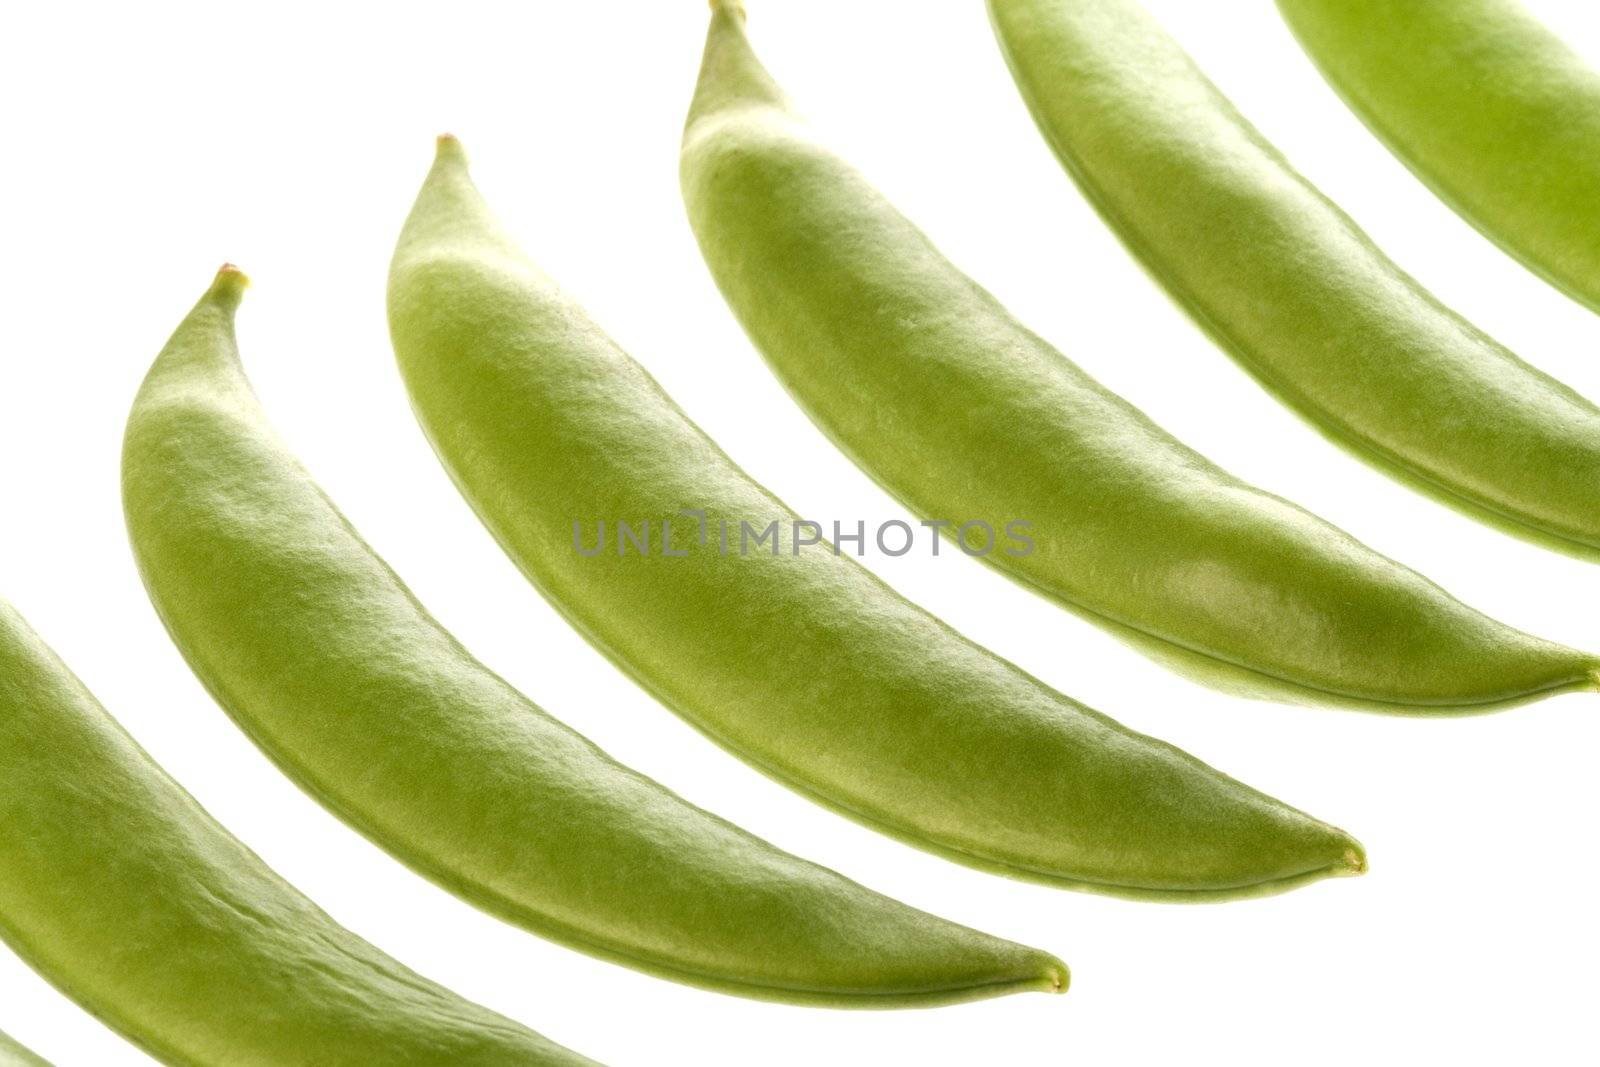 Isolated macro image of snow peas.